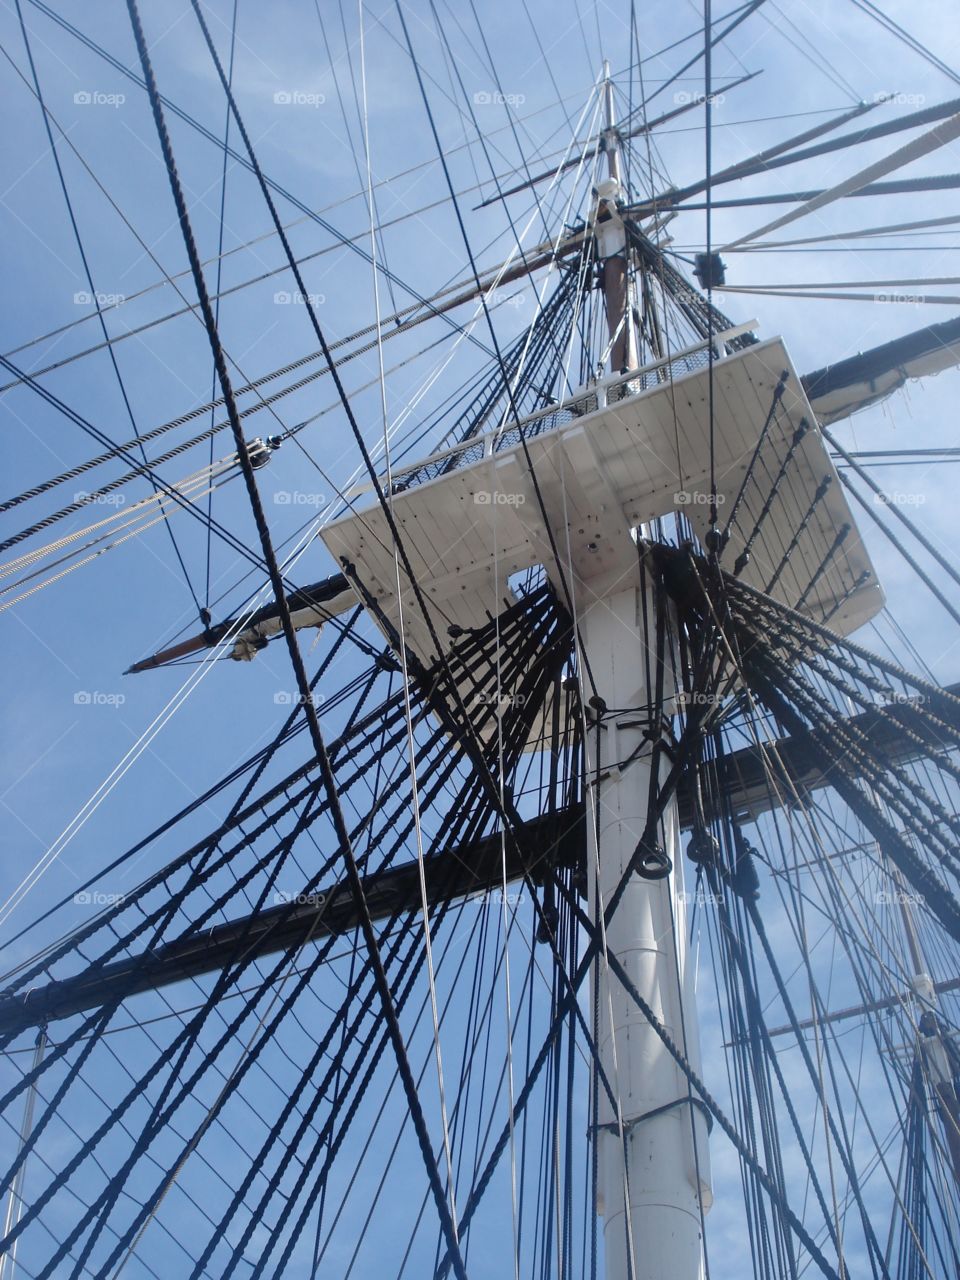 Unique view of historic ship